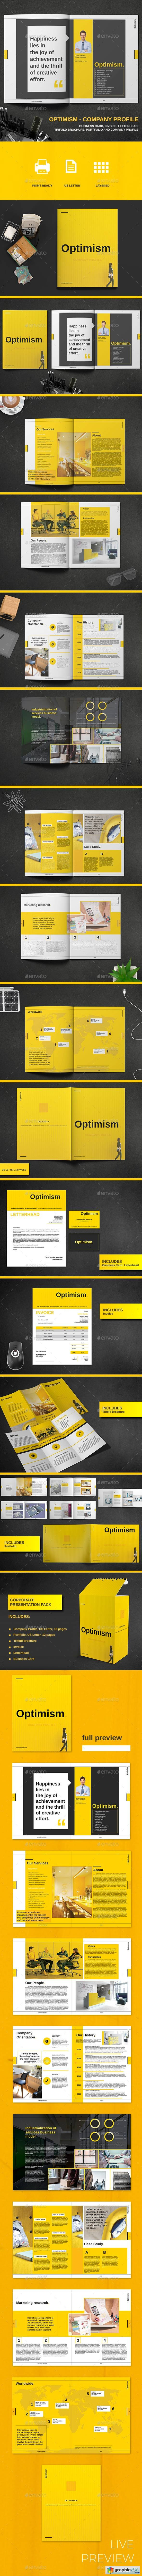 Optimism - Company Profile 17783452